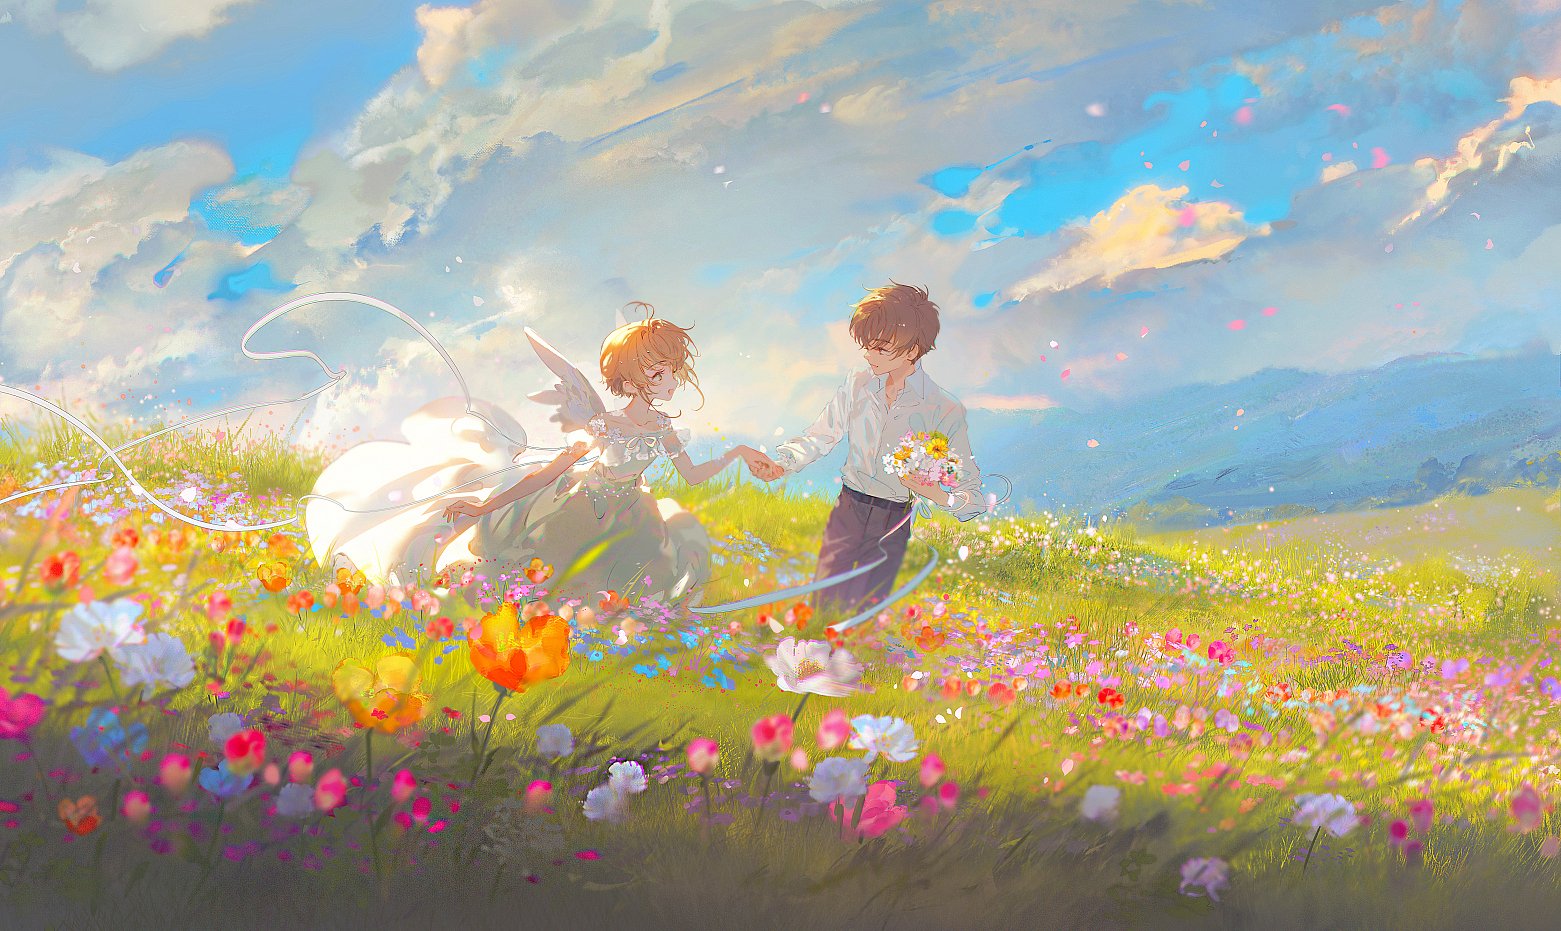 Anime 1561x931 anime boys anime girls flowers grass sky clouds holding hands wings dress couple Cardcaptor Sakura field anime couple